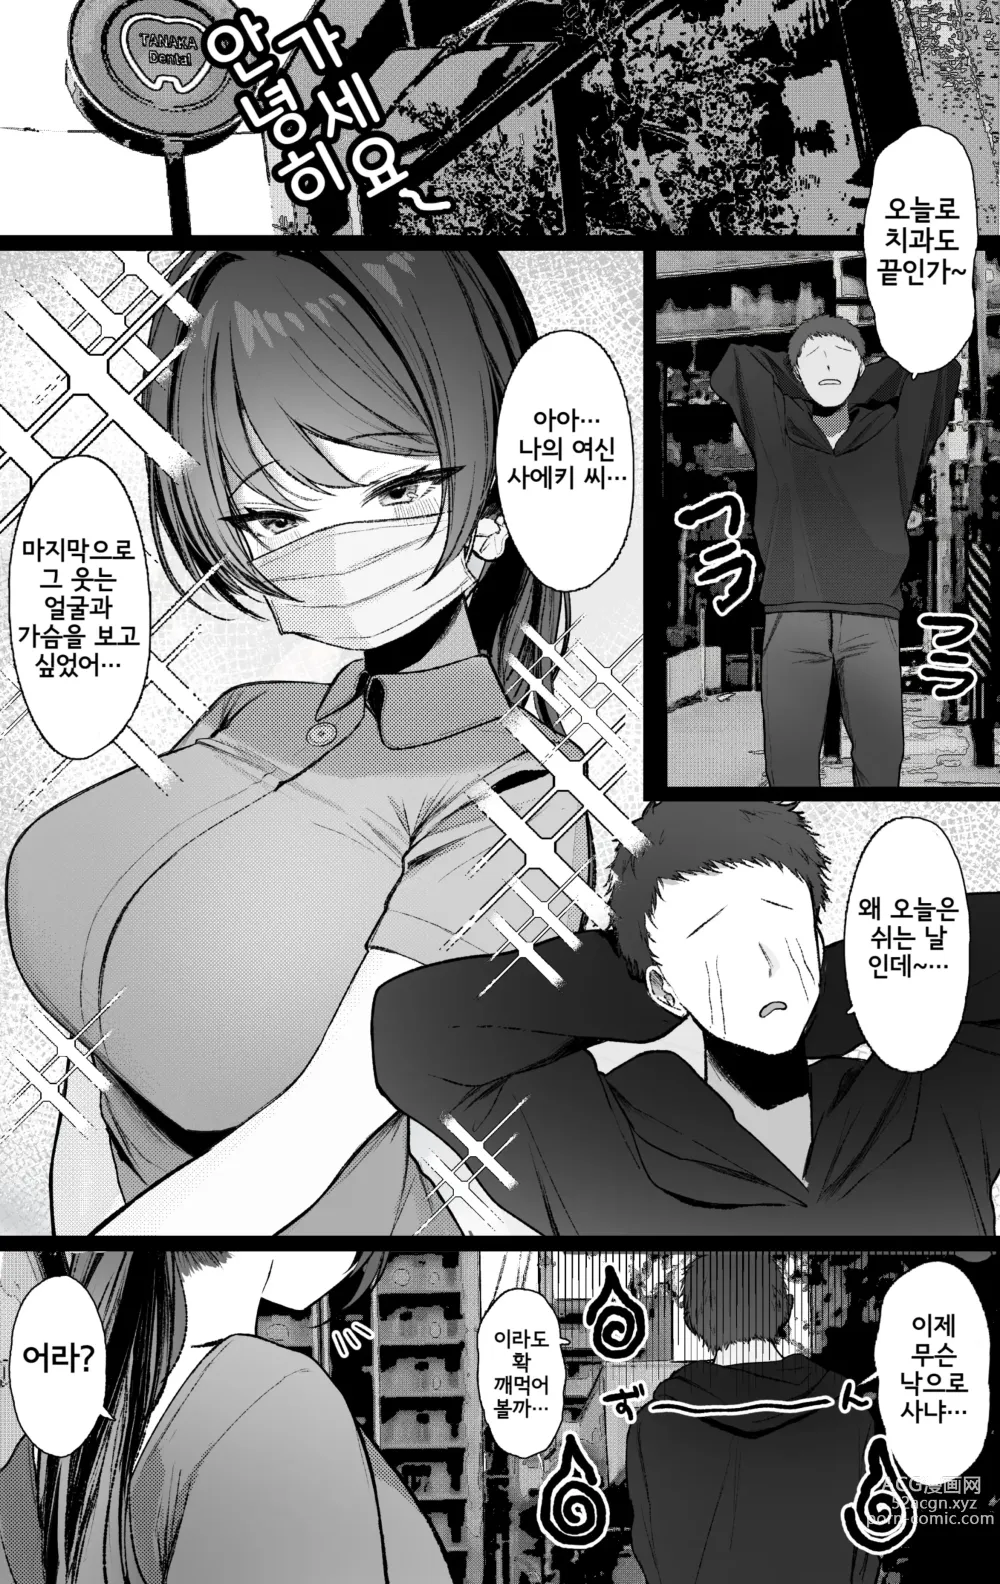 Page 2 of doujinshi 일하면서 맘에든 취향의 남자 환자를 유혹해 성적으로 먹는 것이 취미인 야한 치과간호사 누나의 이야기